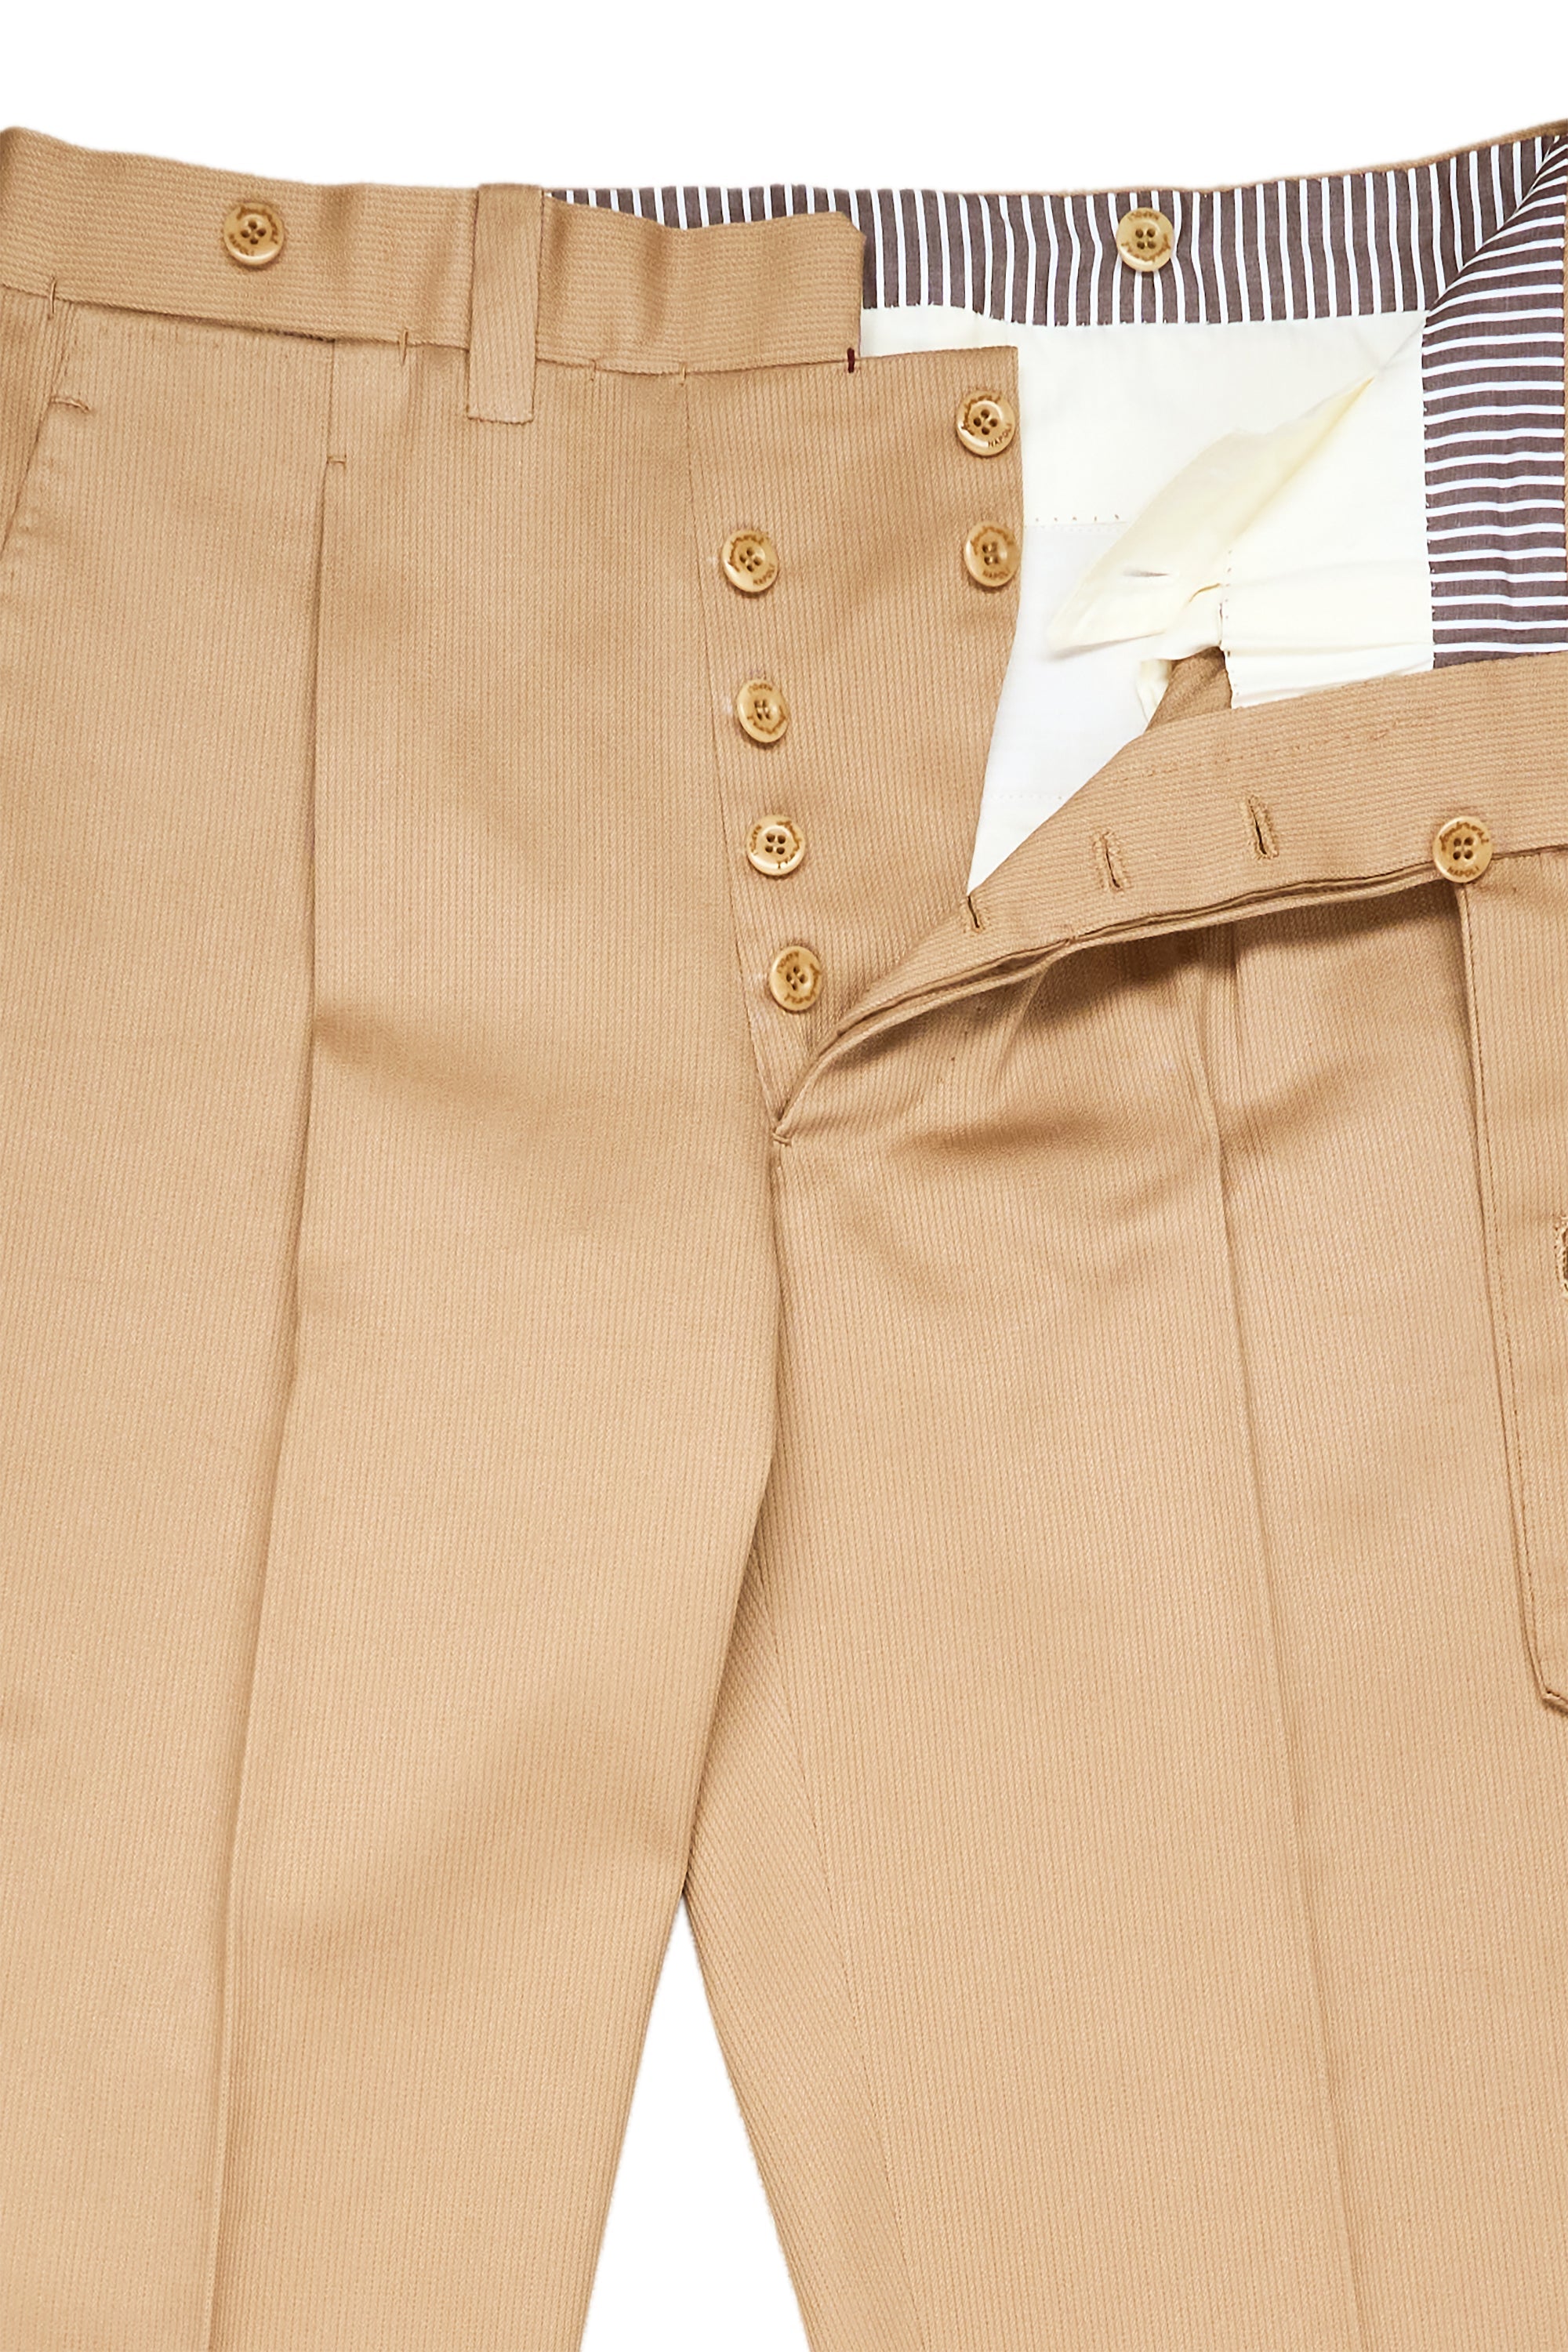 Ambrosi Beige Cotton Single Pleat Trousers